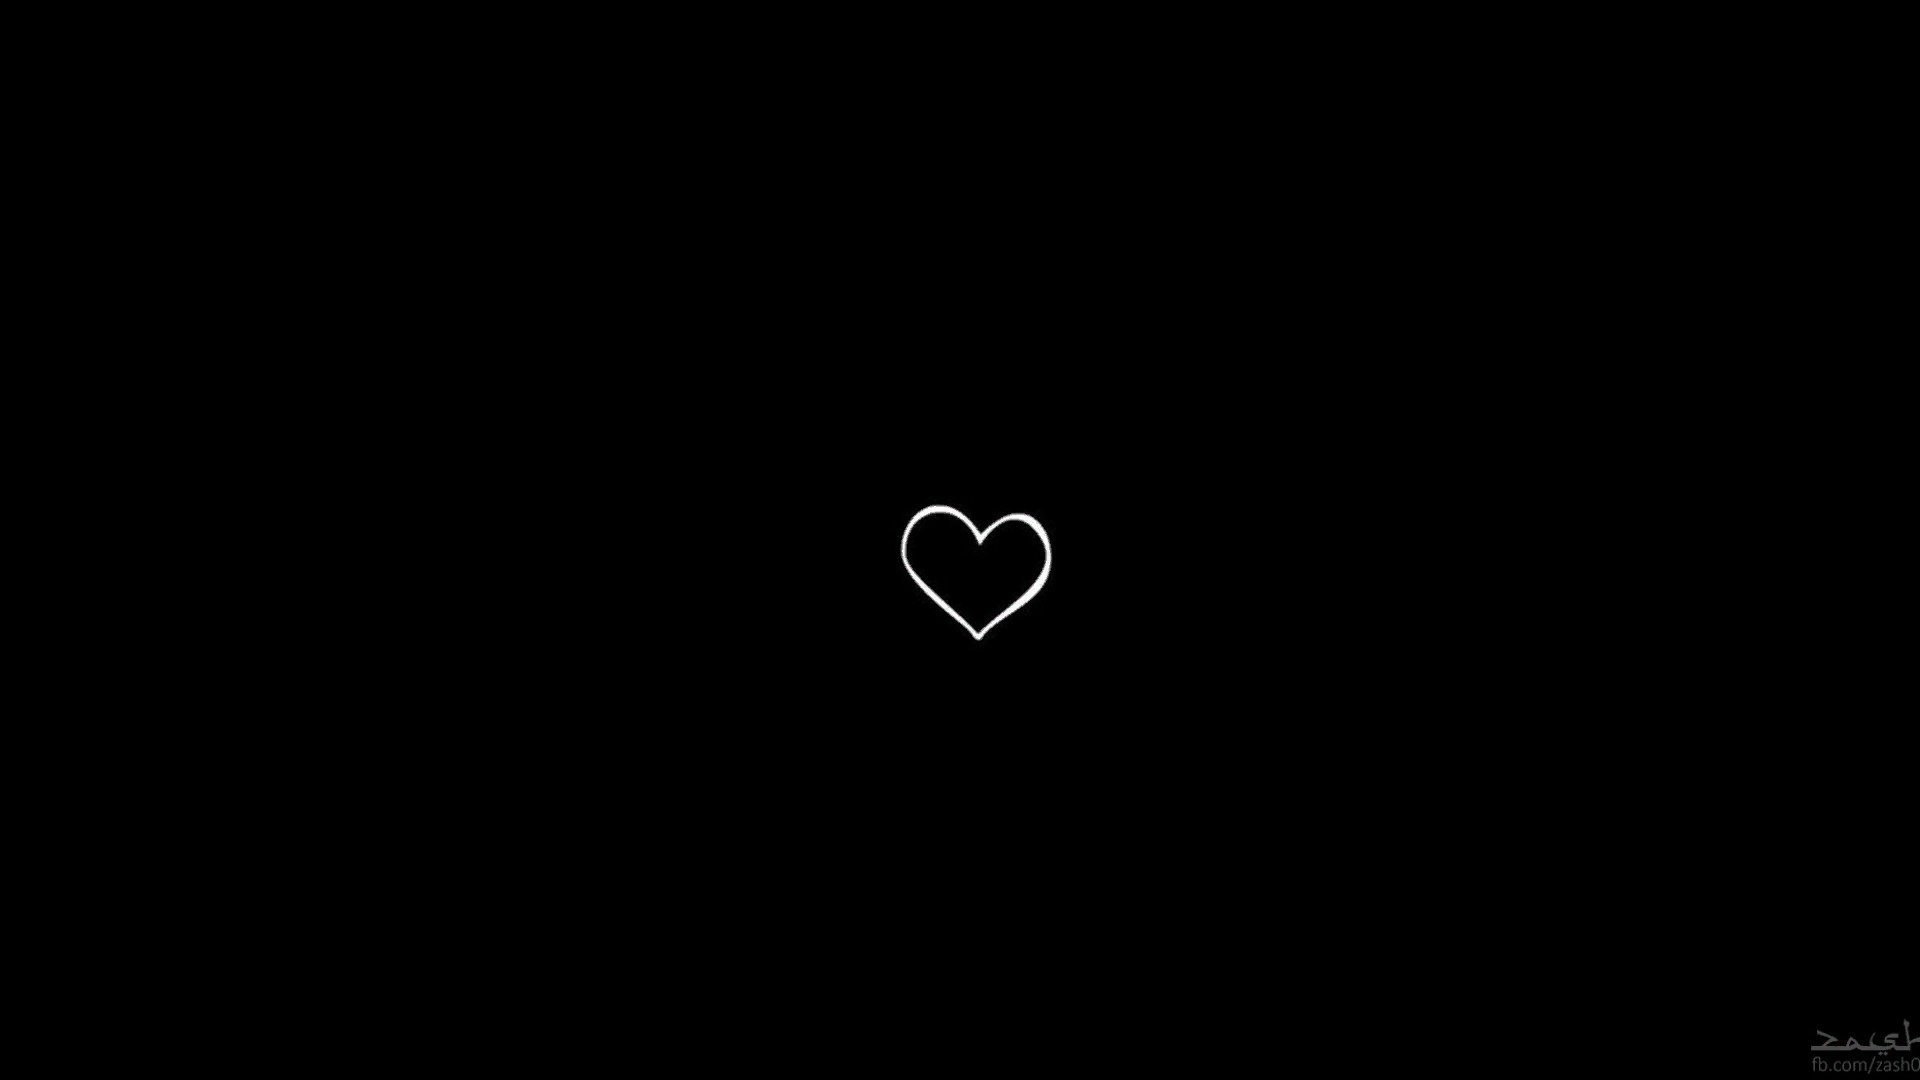 Черно белое сердце из тт - фото и картинки abrakadabra.fun